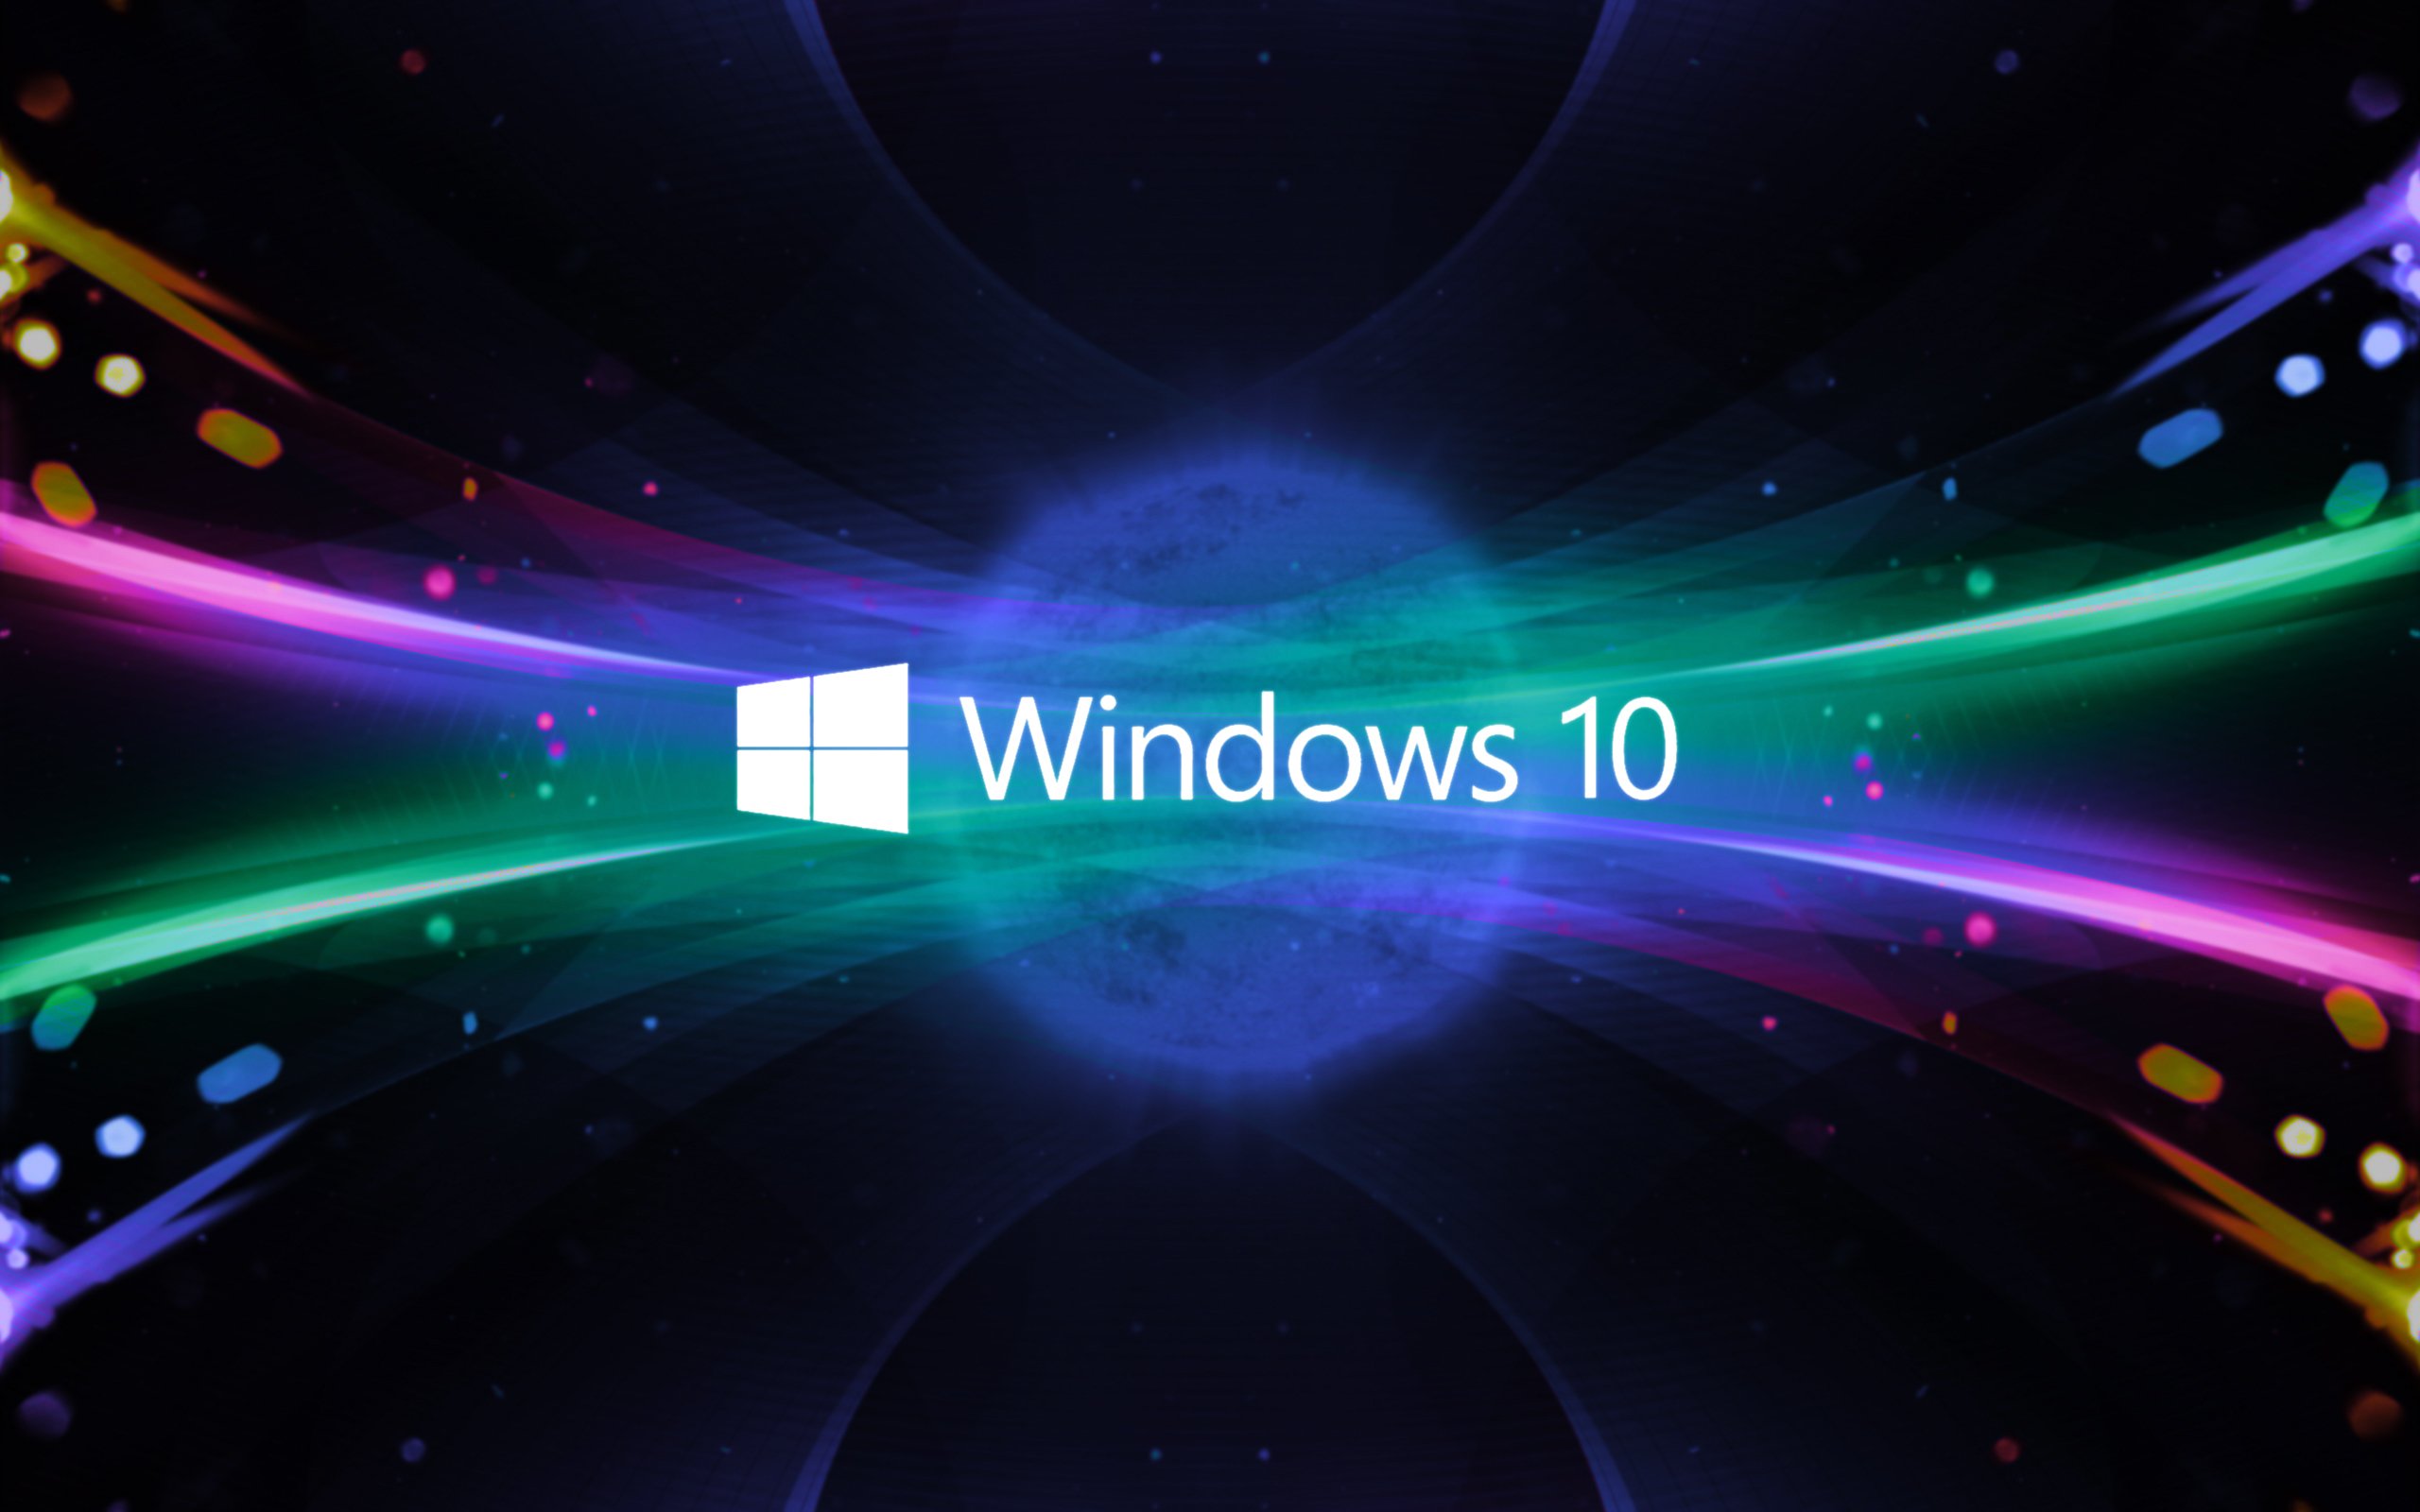 Windows 10 HD Wallpapers 2015 Tech96